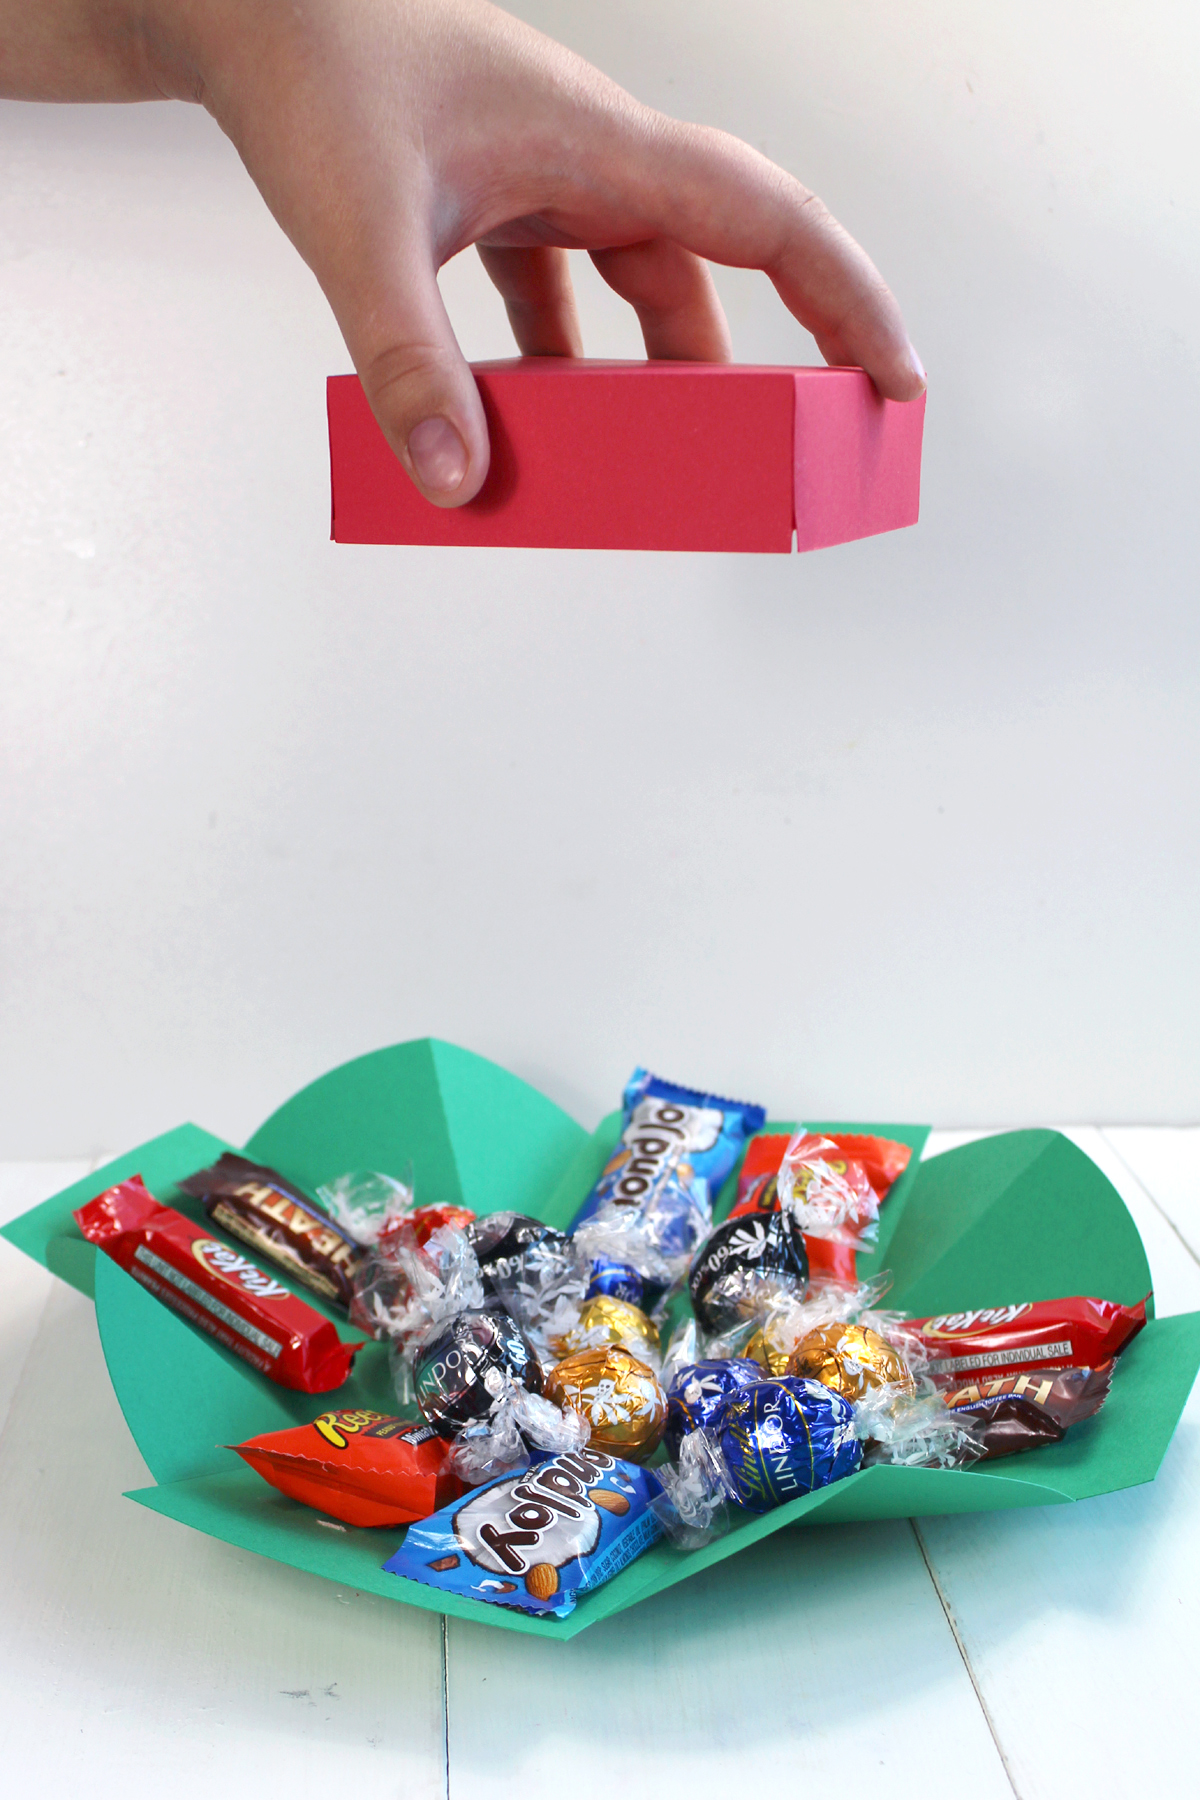 DIY Candy Explosion Box Tutorial - It's So Corinney